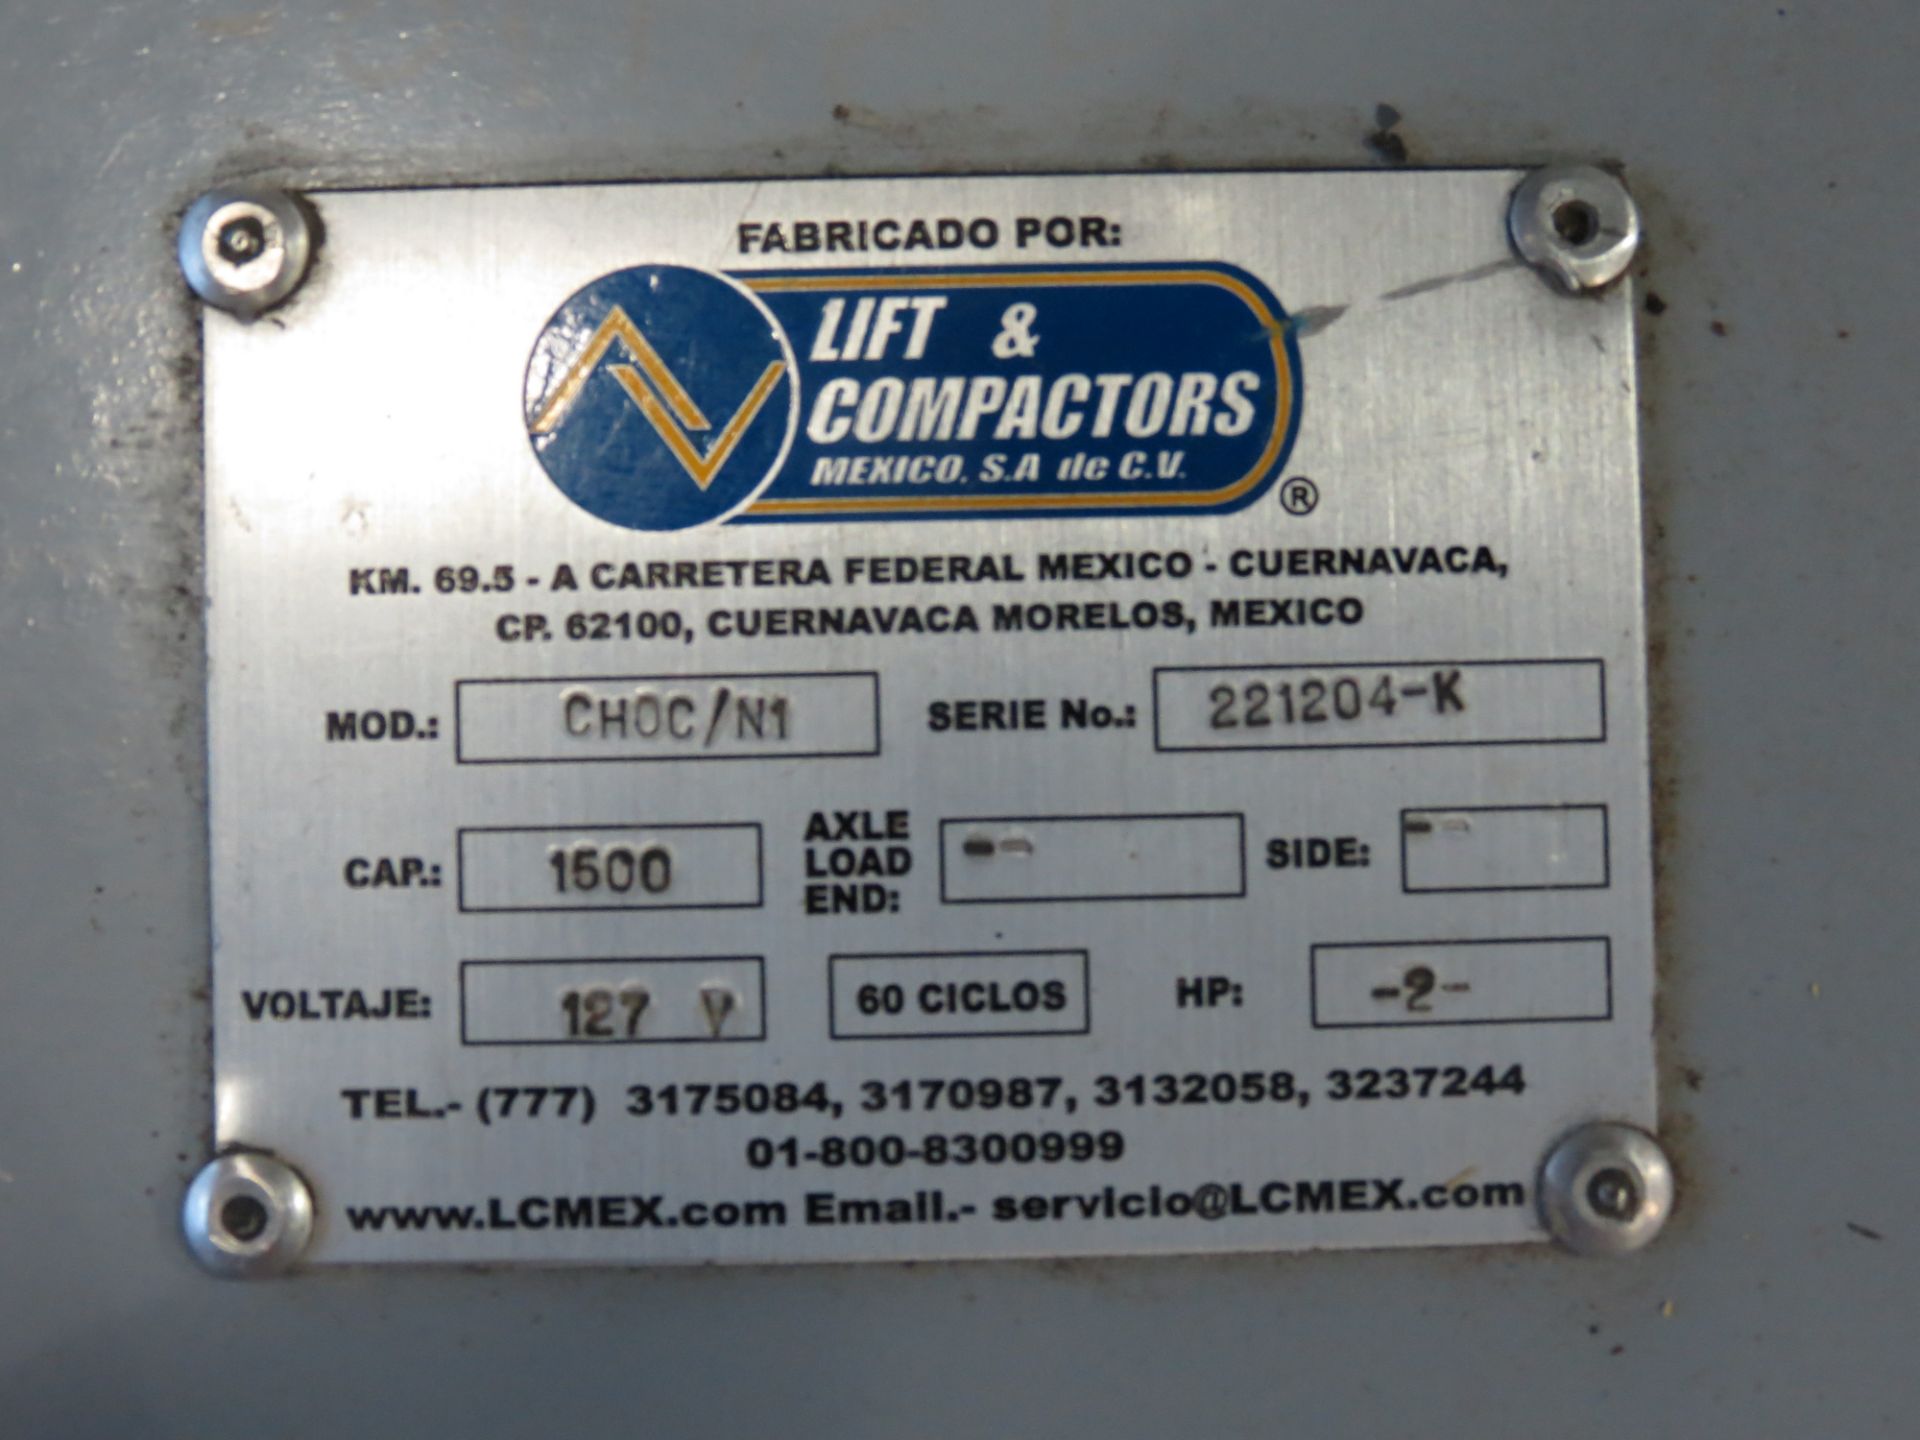 2 Lifting platforms, brand Lift & Compactors model CHOC/N1, 22124-K Series, 221204-J - Image 13 of 13